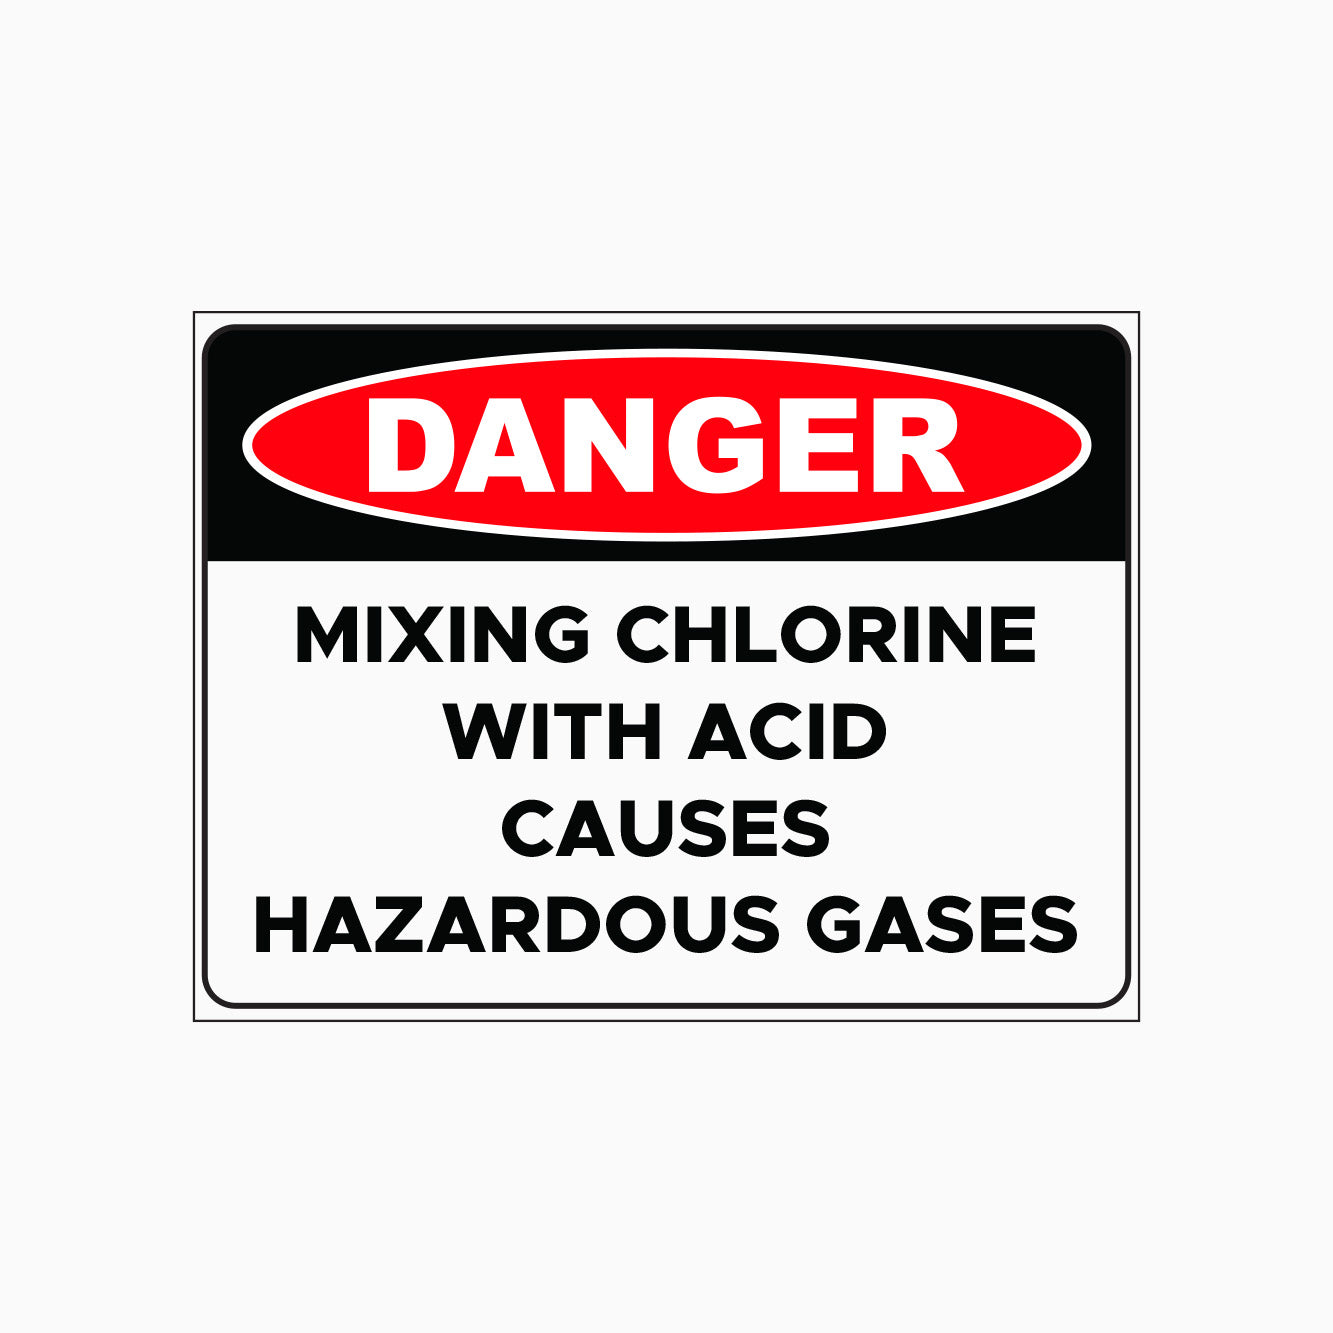 DANGER SIGN - MIXING CHLORINE WITH ACID CAUSES HAZARDOUS GASAS SIGN